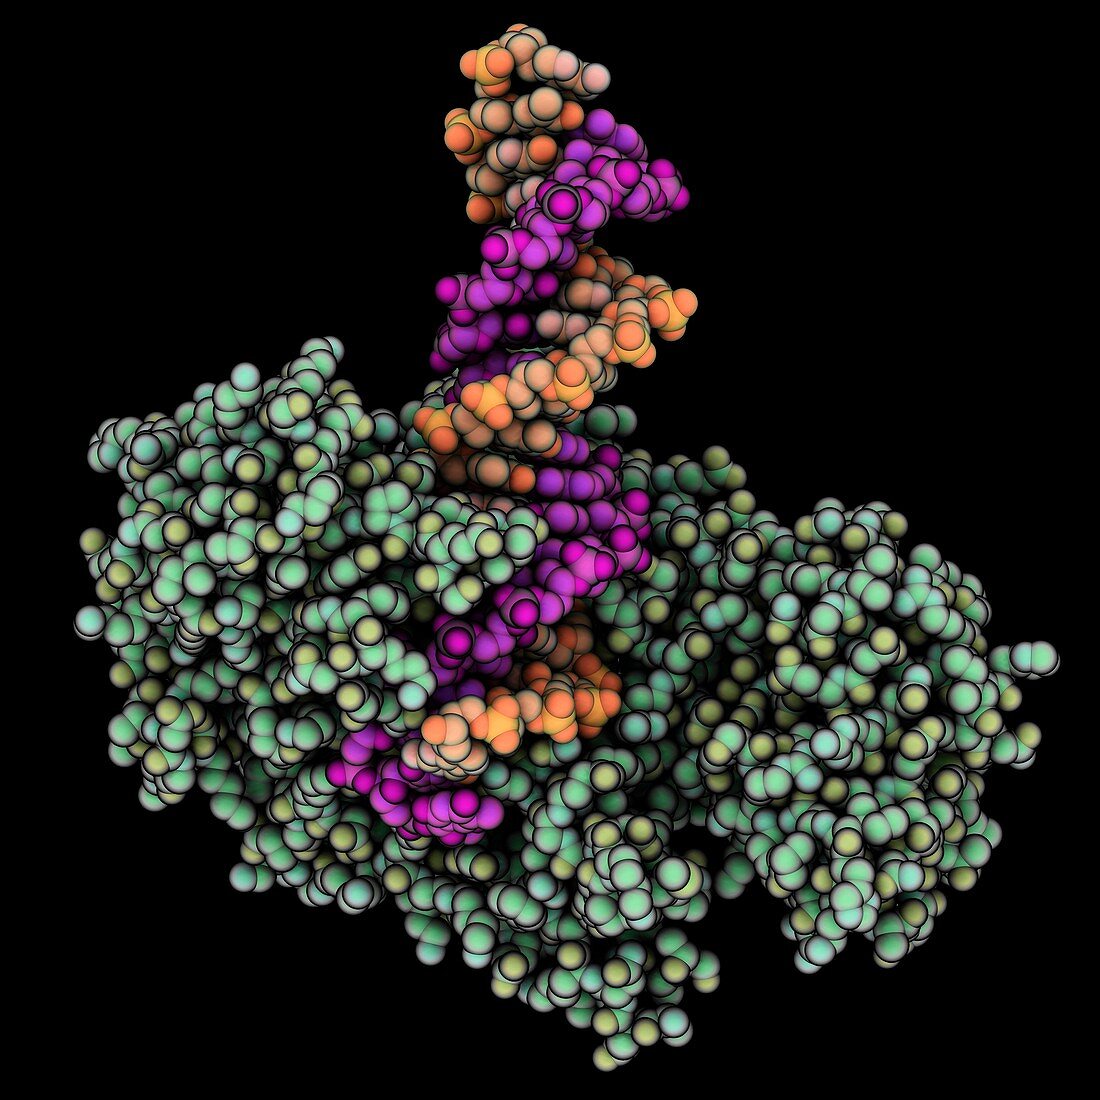 FokI nuclease bound to DNA